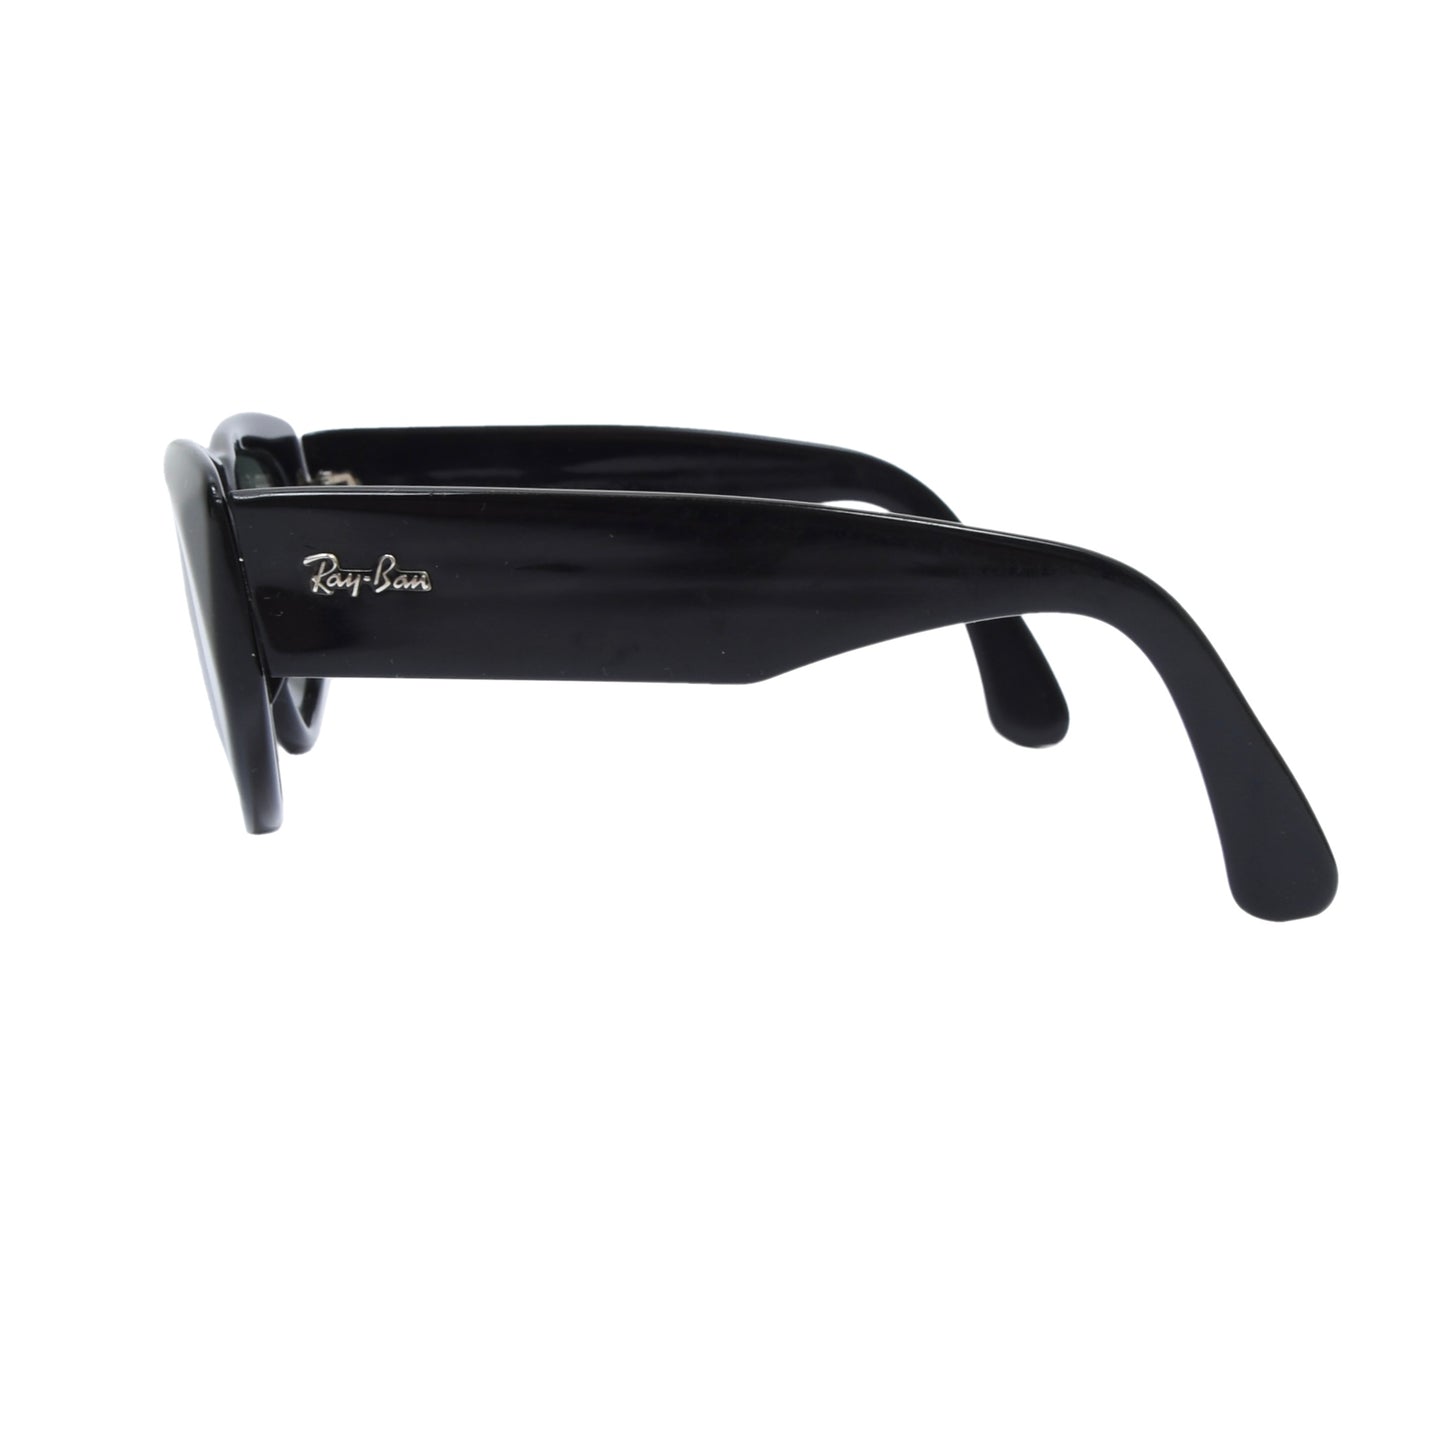 B&L Ray-Ban Dekko Sunglasses - Black